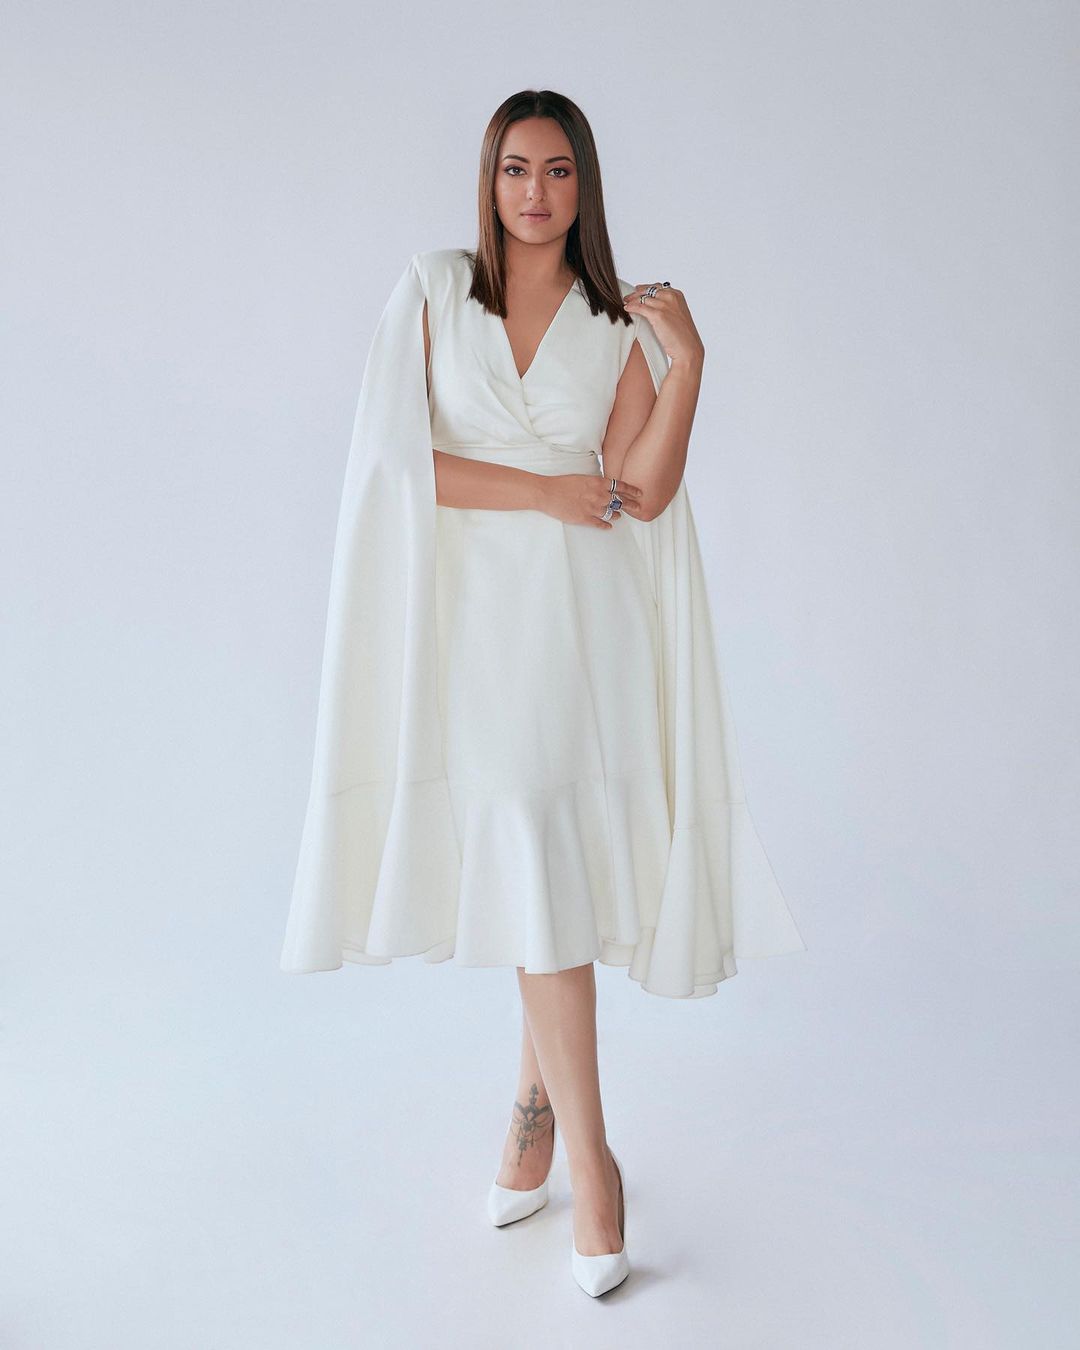 Sonakshi Sinha looks stylish in an all-white ensemble.